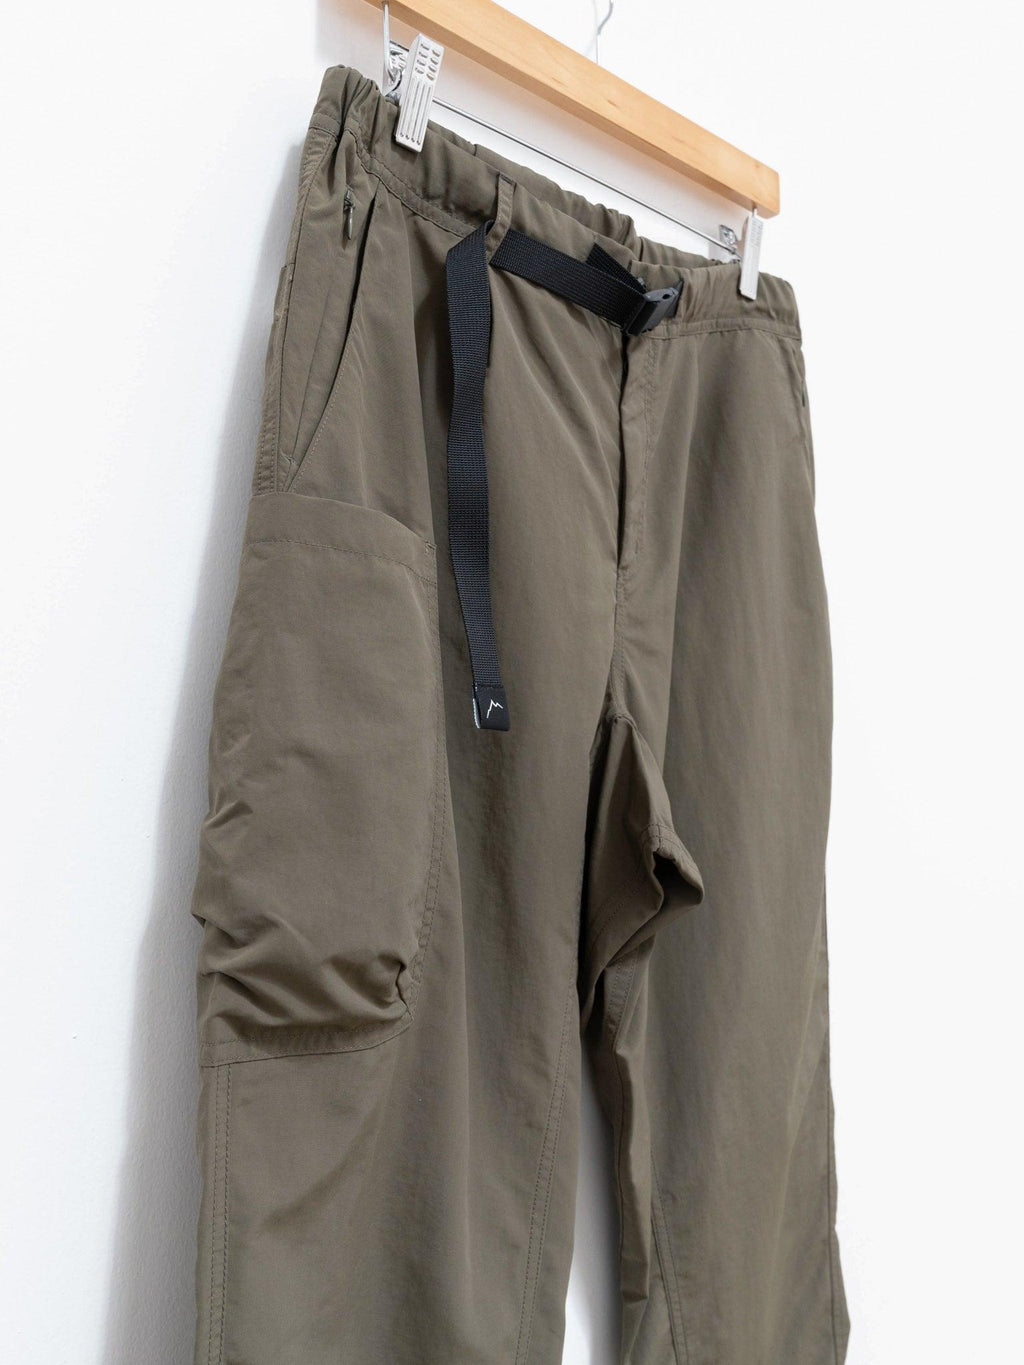 Namu Shop - CAYL Multi Pocket Pants - Khaki Green